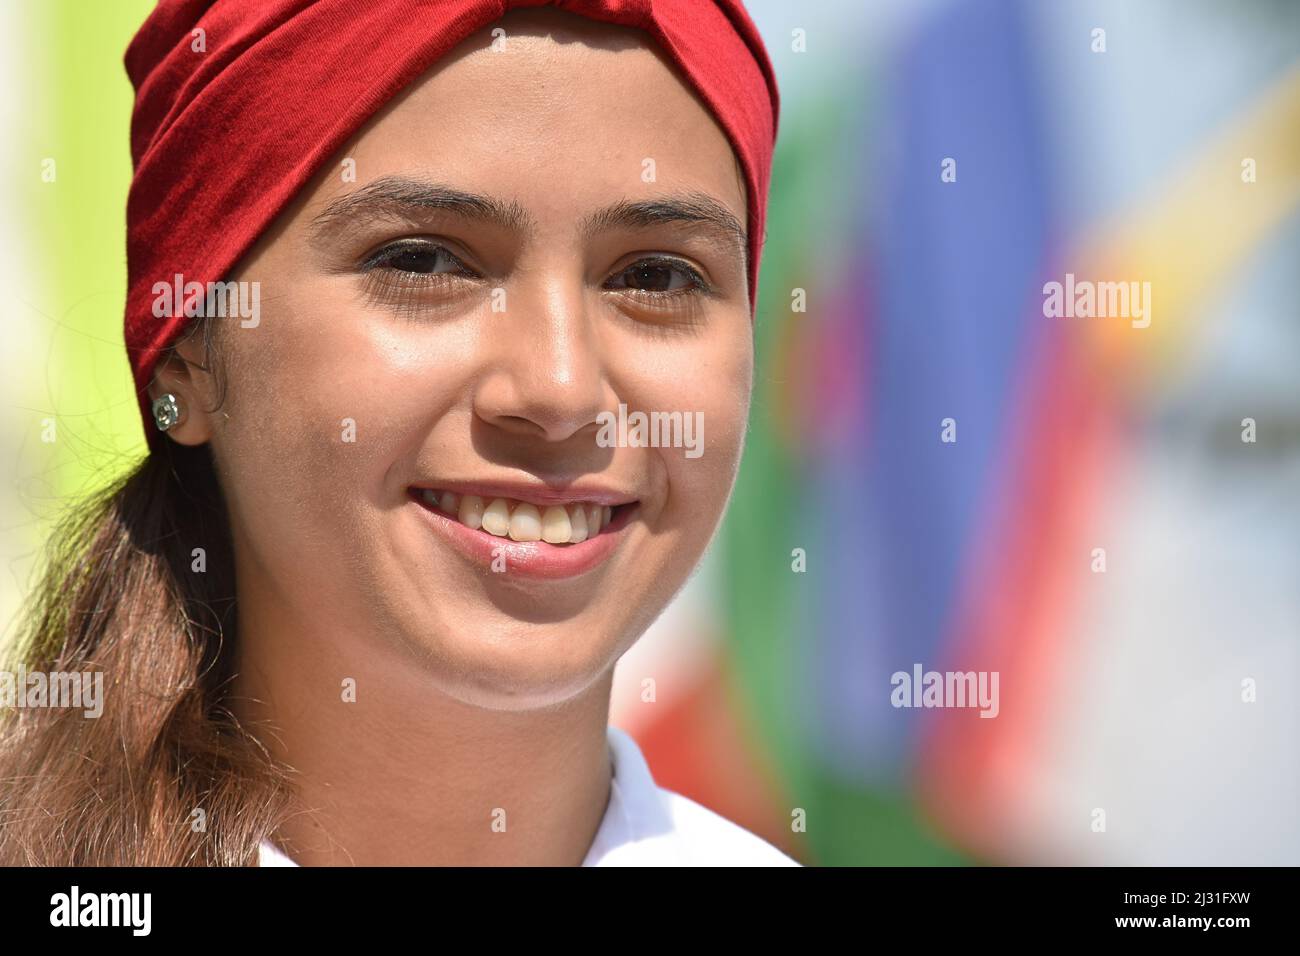 A Happy Diverse Female International Student Stock Photo